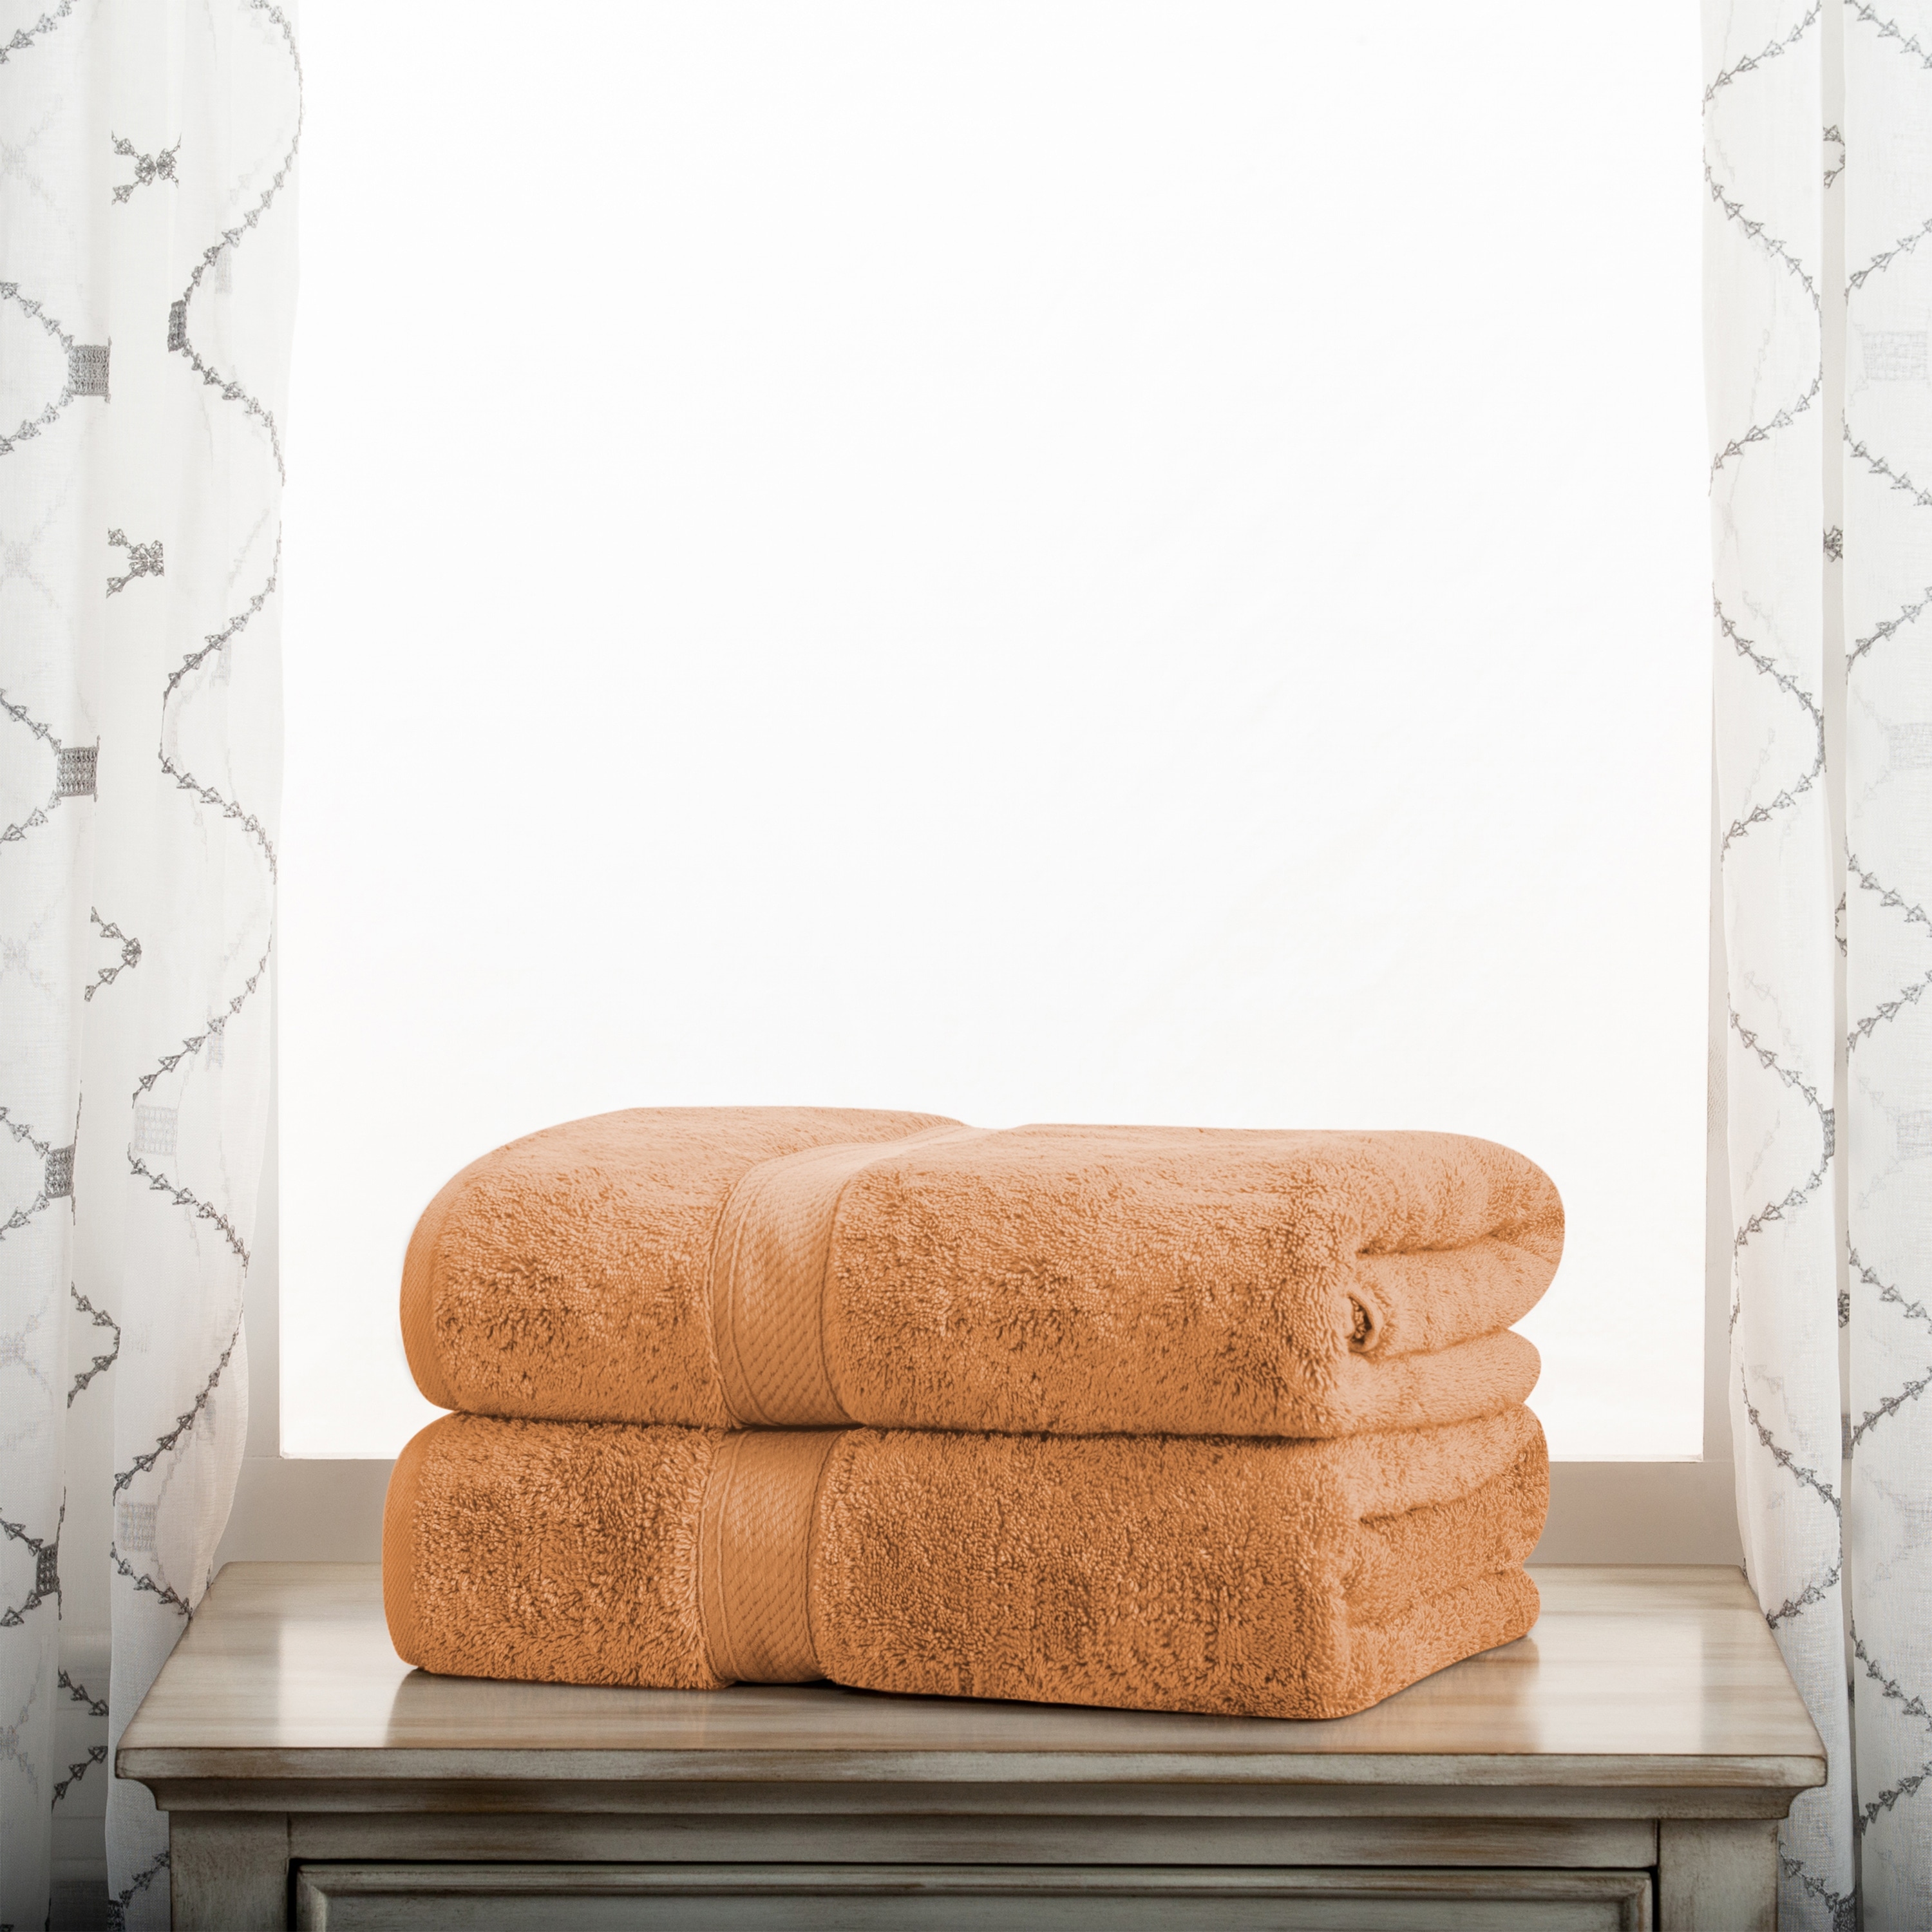 Superior Marche Egyptian Cotton Bath Towel - Set of 2